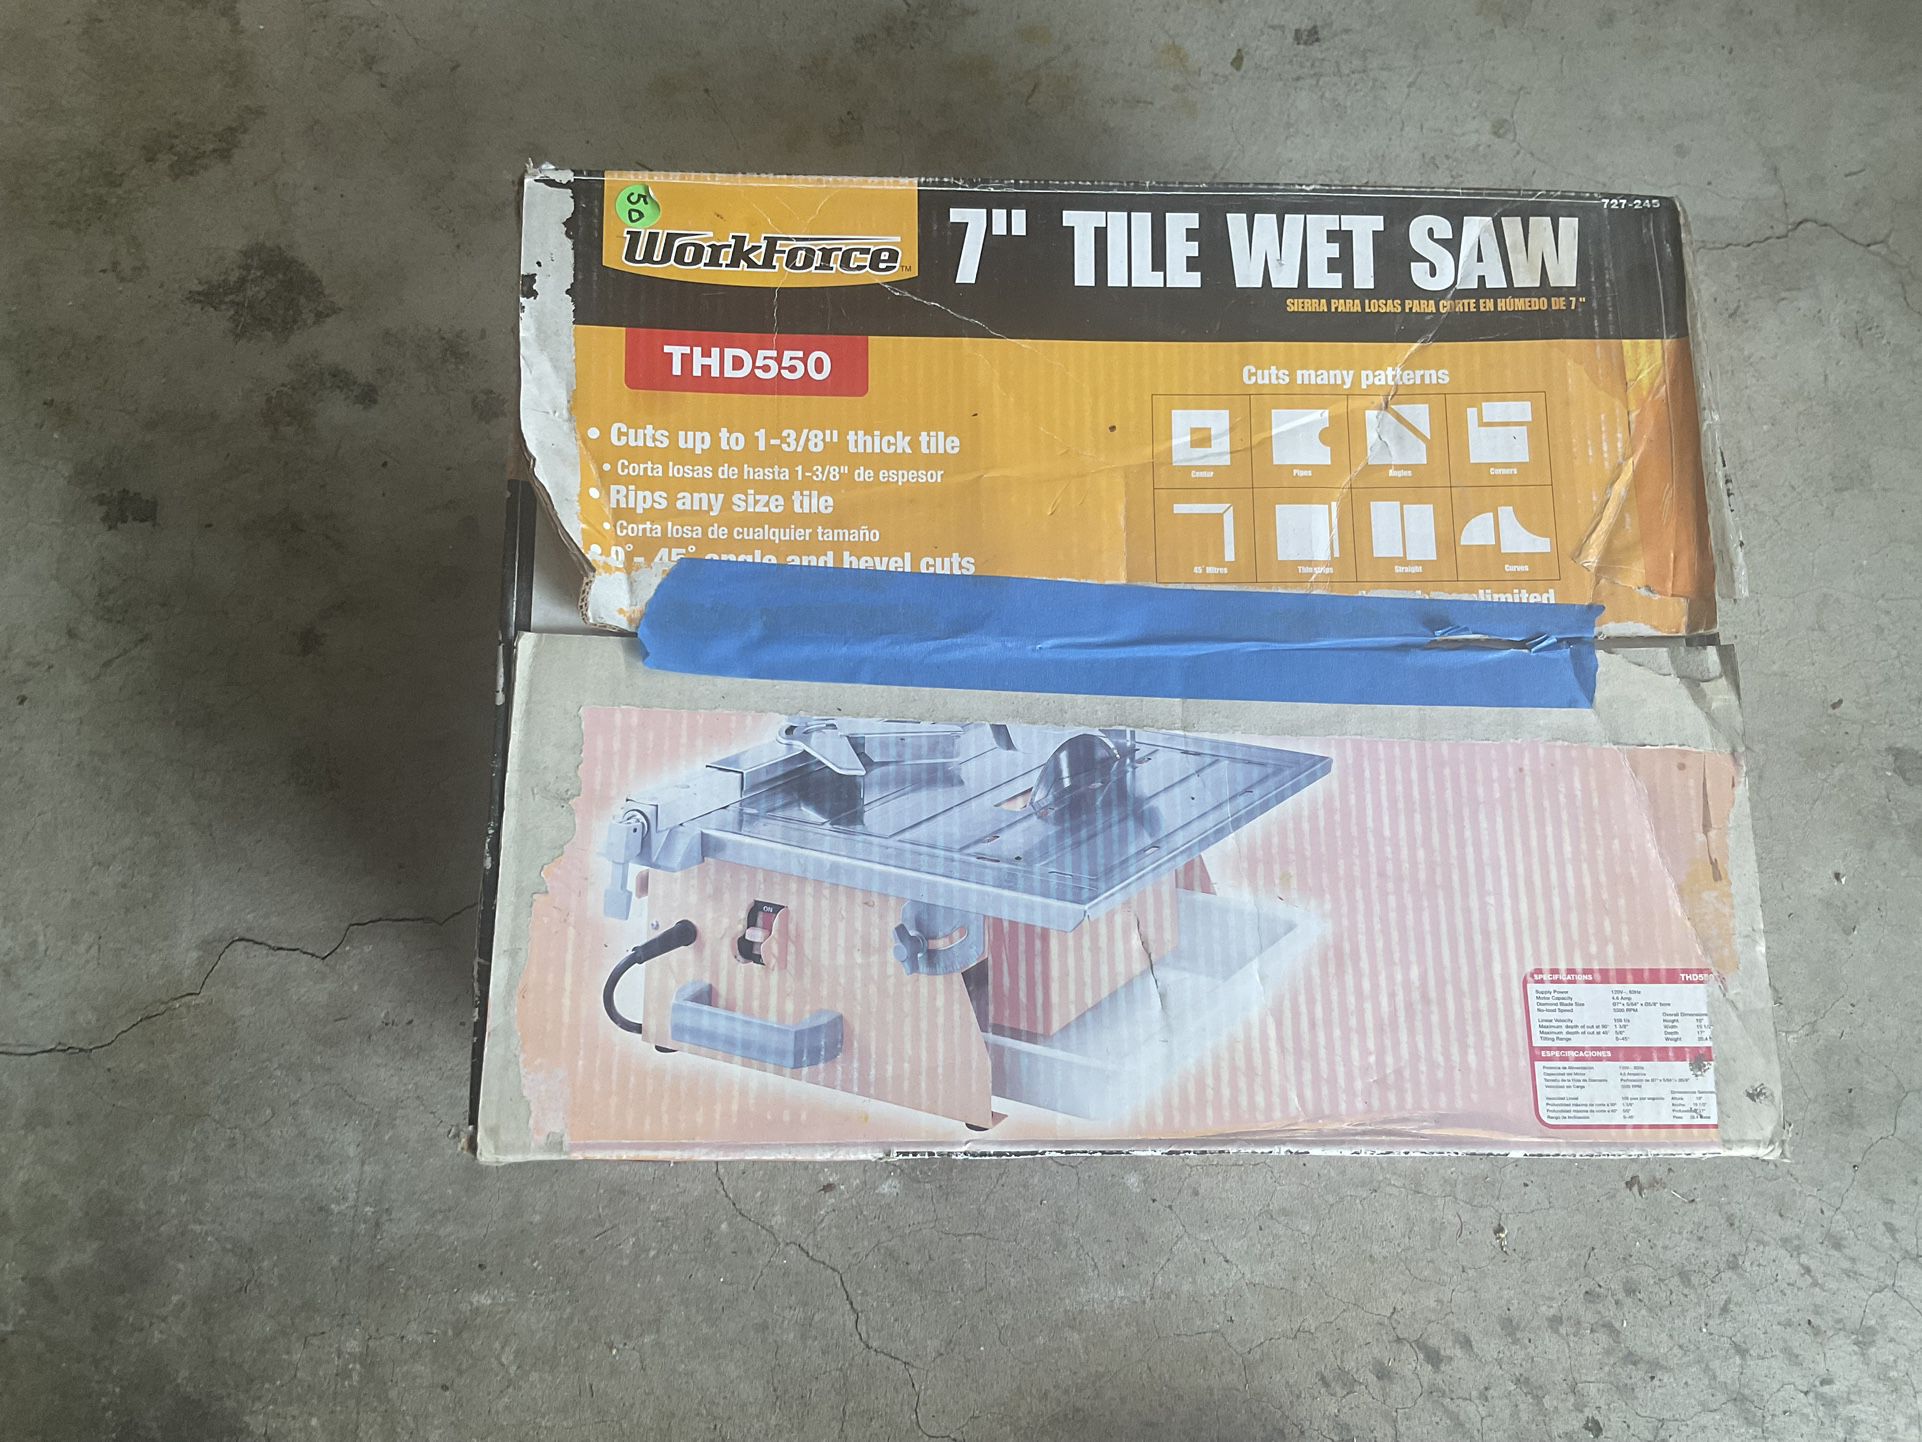 Tile Wet Saw